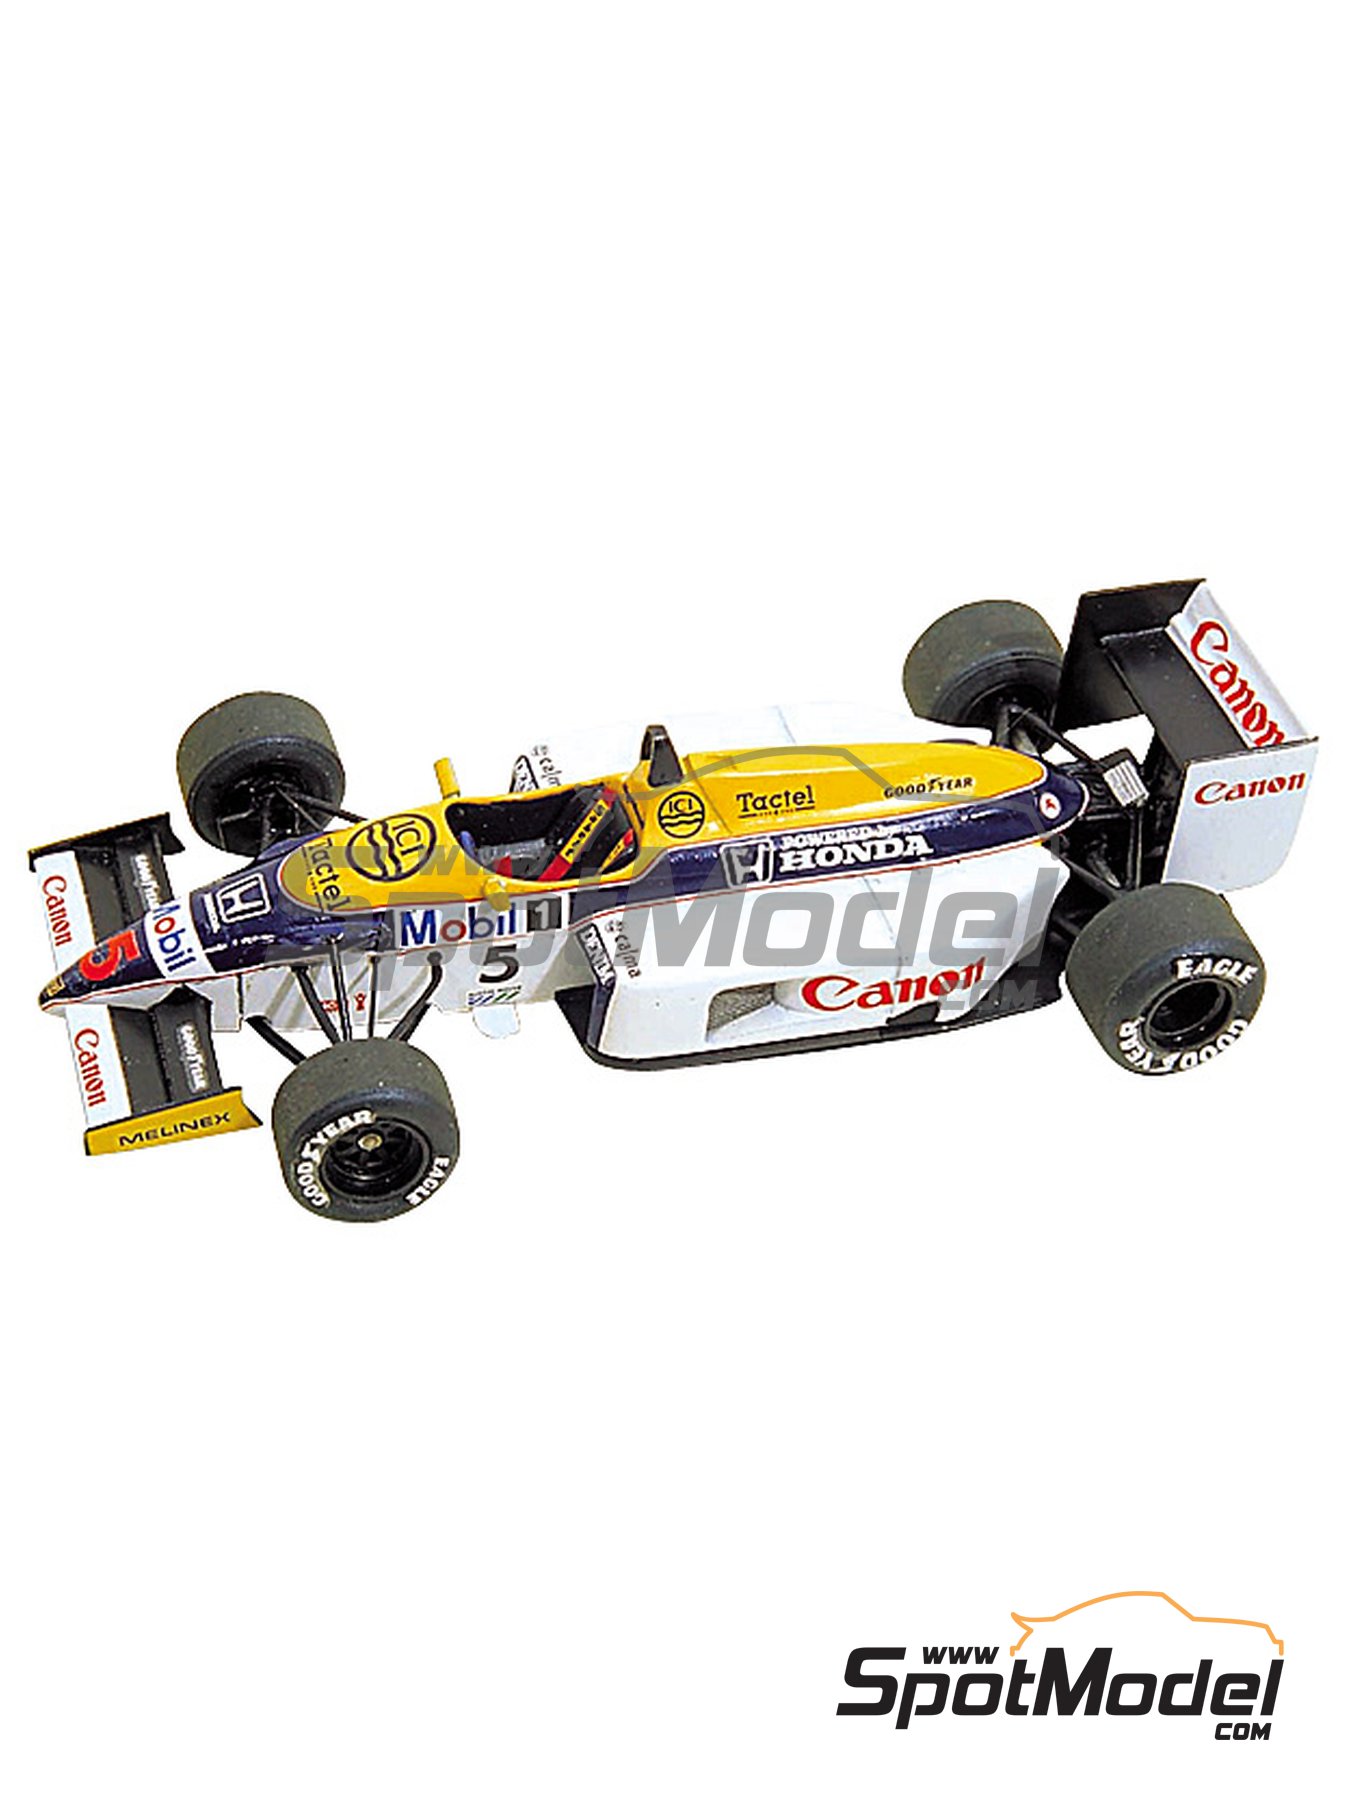 Tameo Kits TMK041: Car scale model kit 1/43 scale - Williams Honda